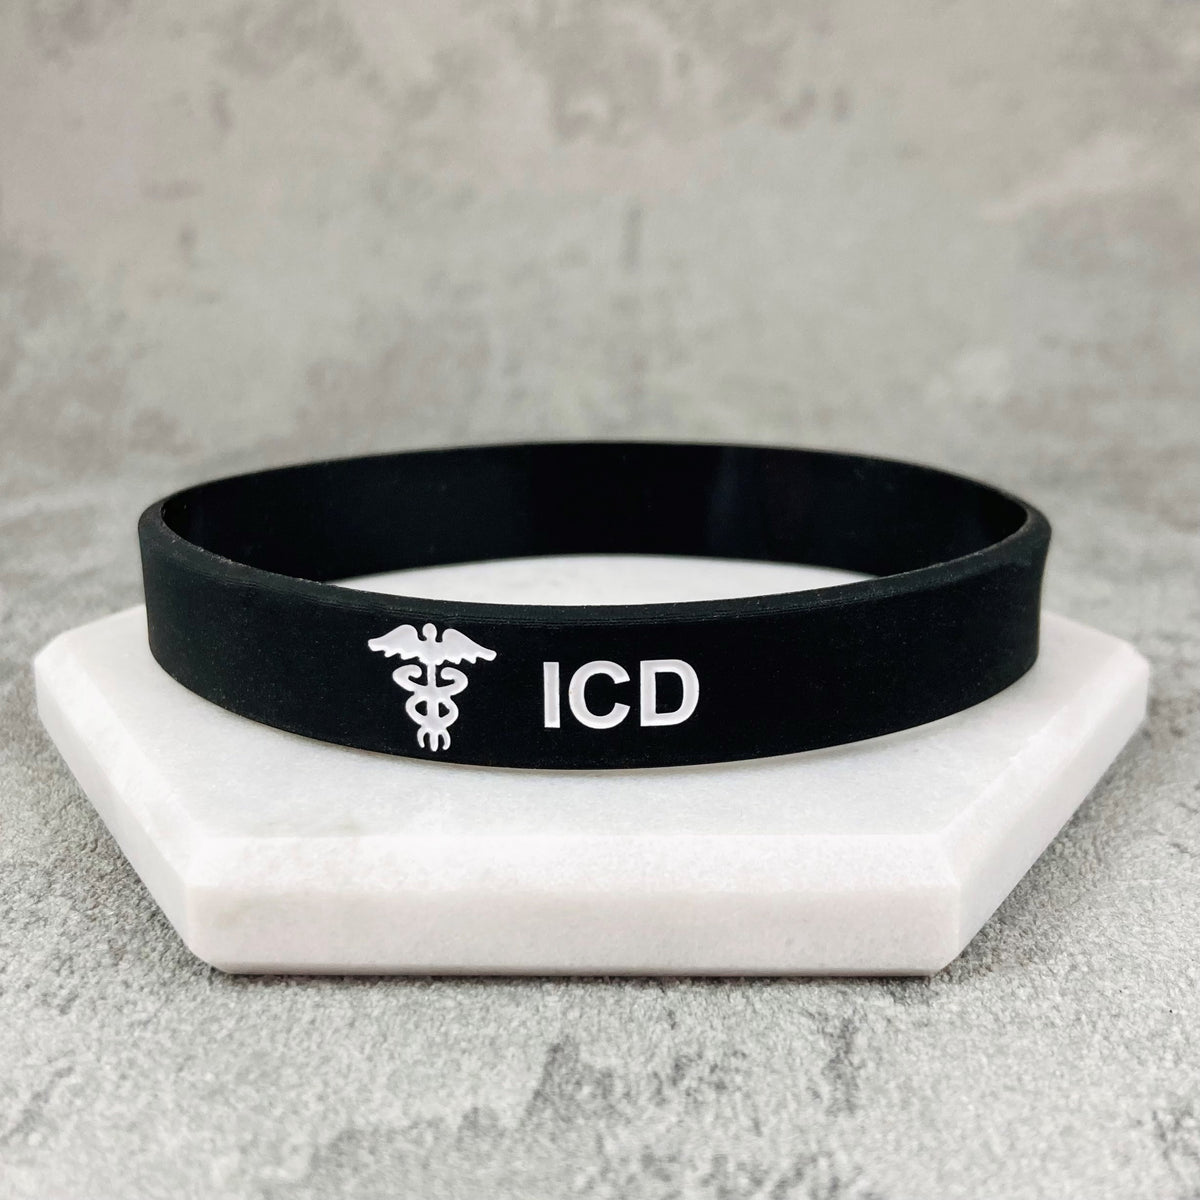 implant awareness wristband silicone band